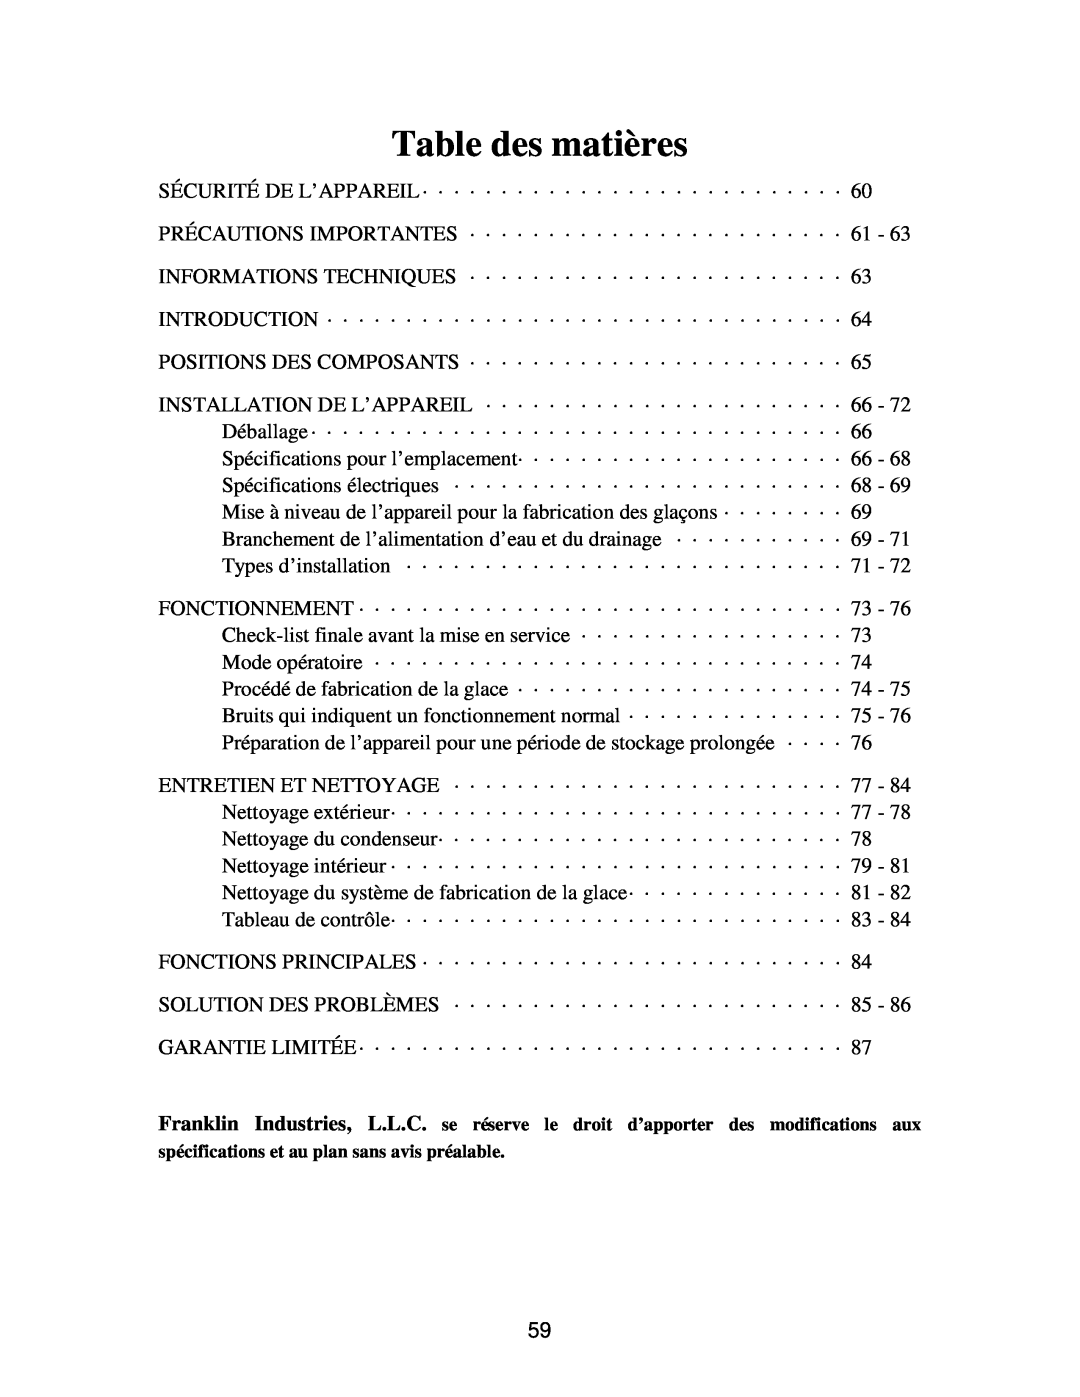 Franklin Industries, L.L.C FIM90, FIM120 user manual Table des matières 